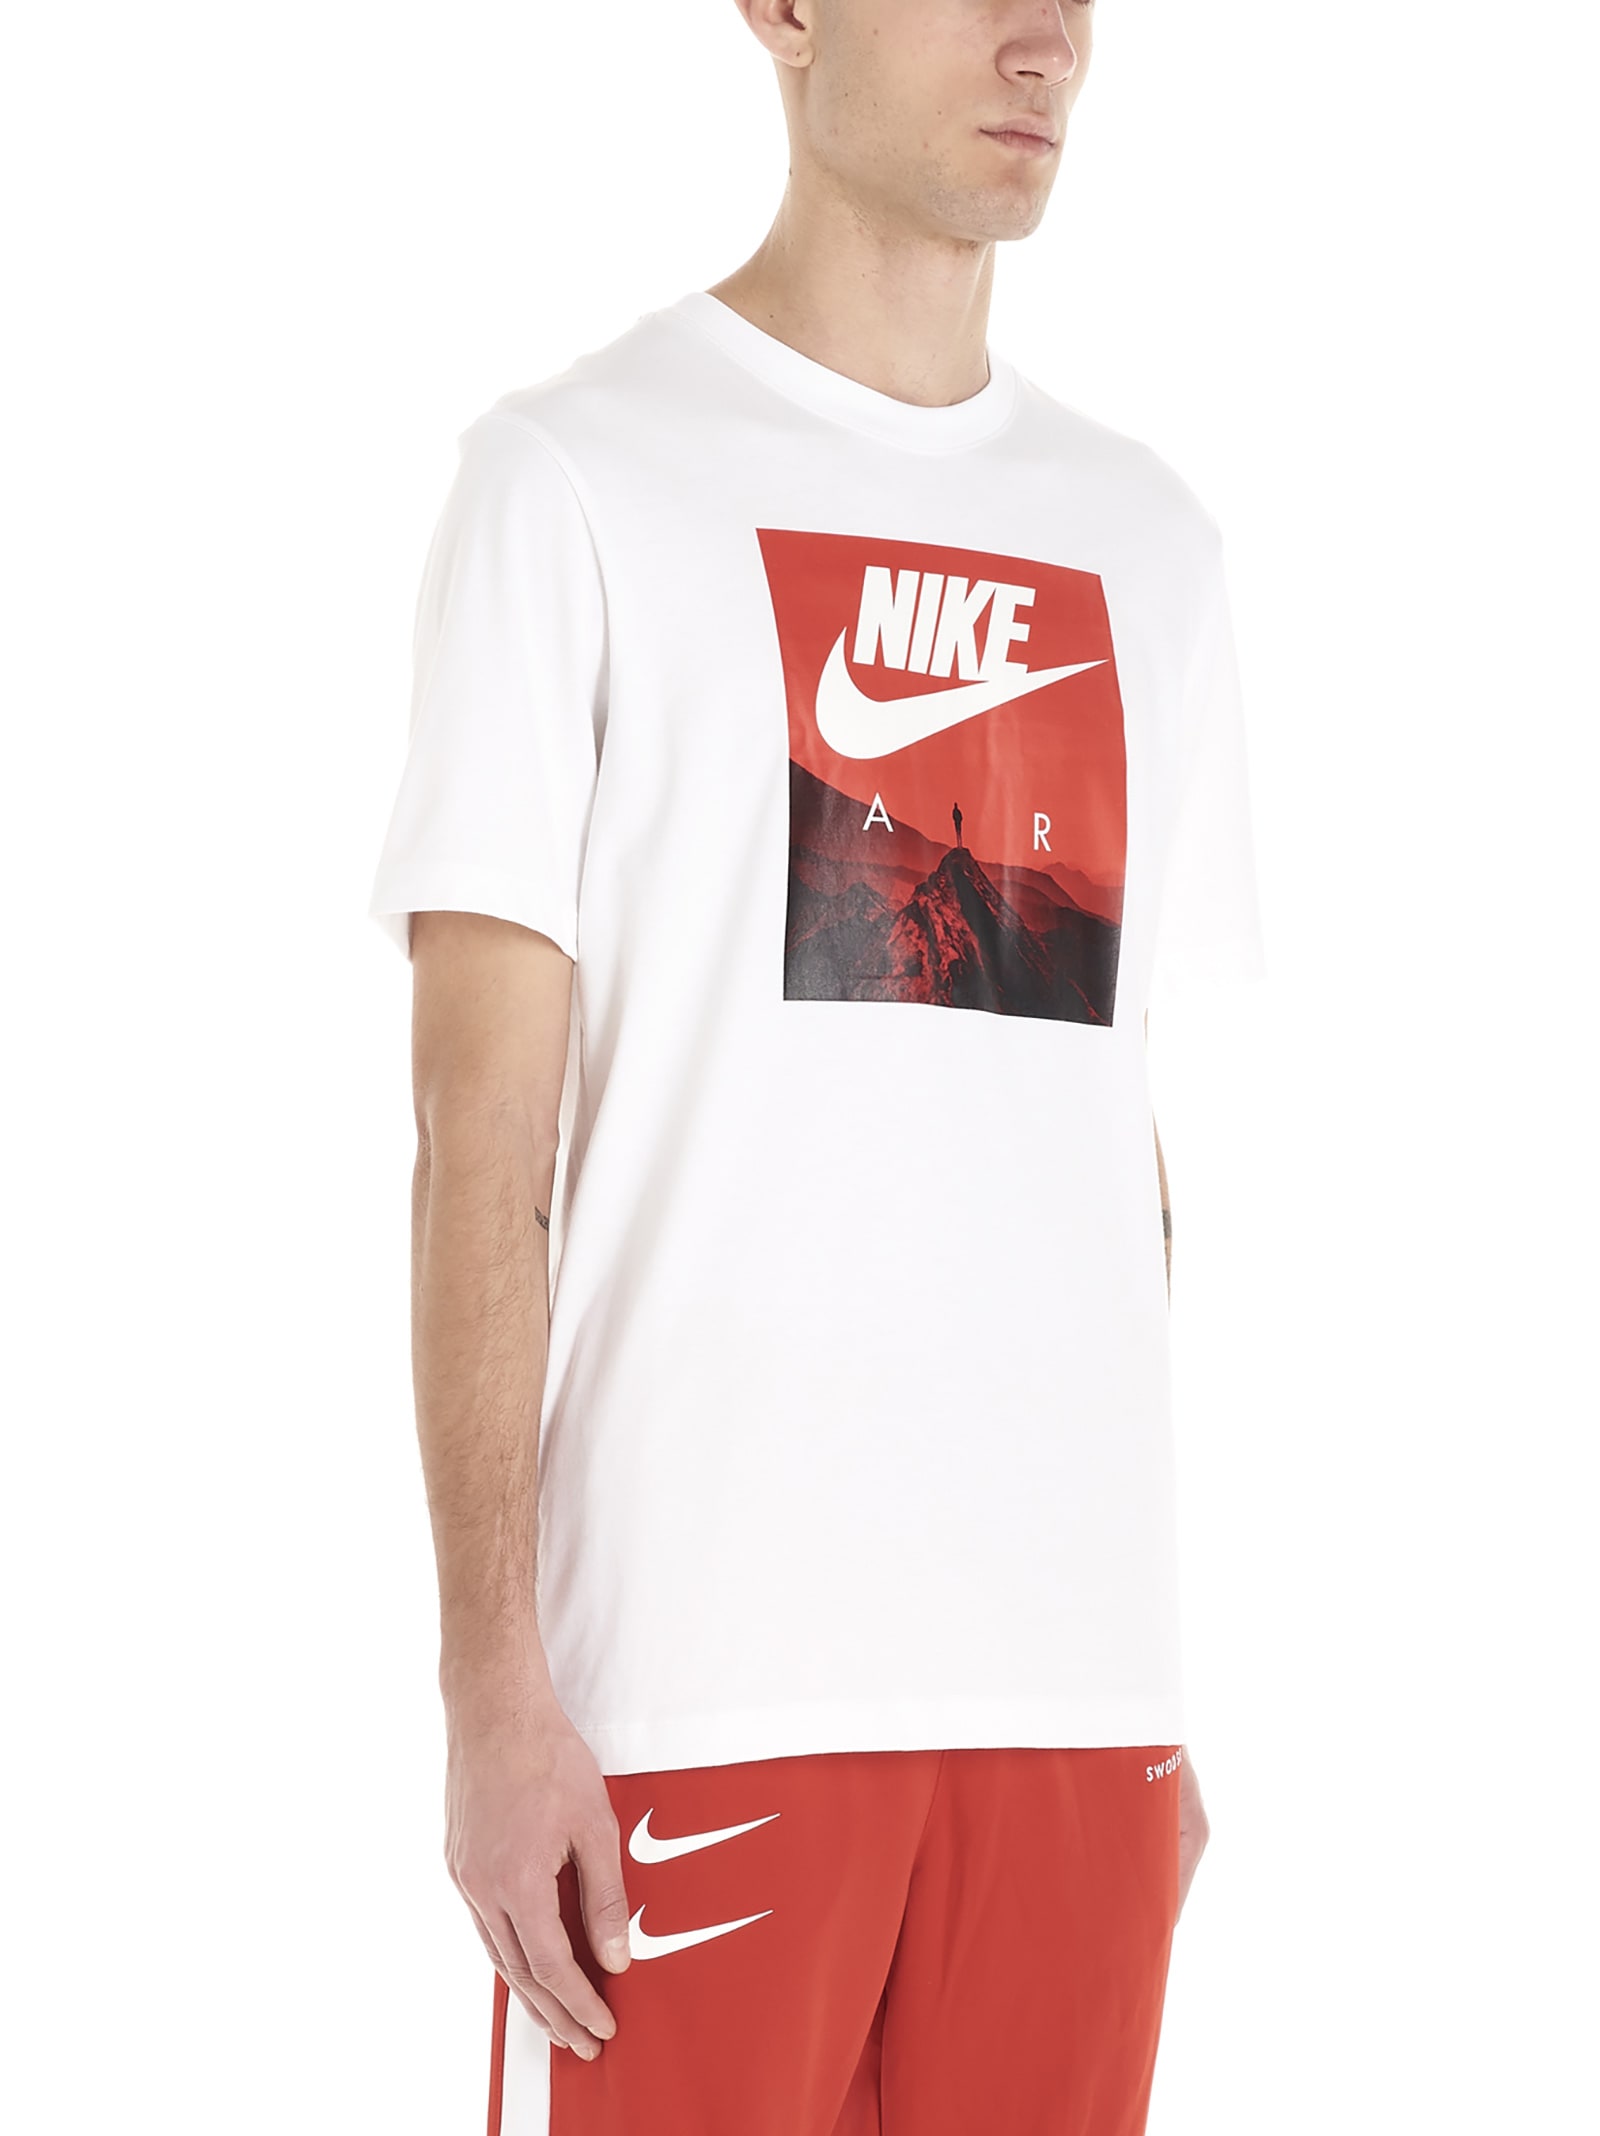 Nike Short Sleeve T Shirts Italist Always Like A Sale